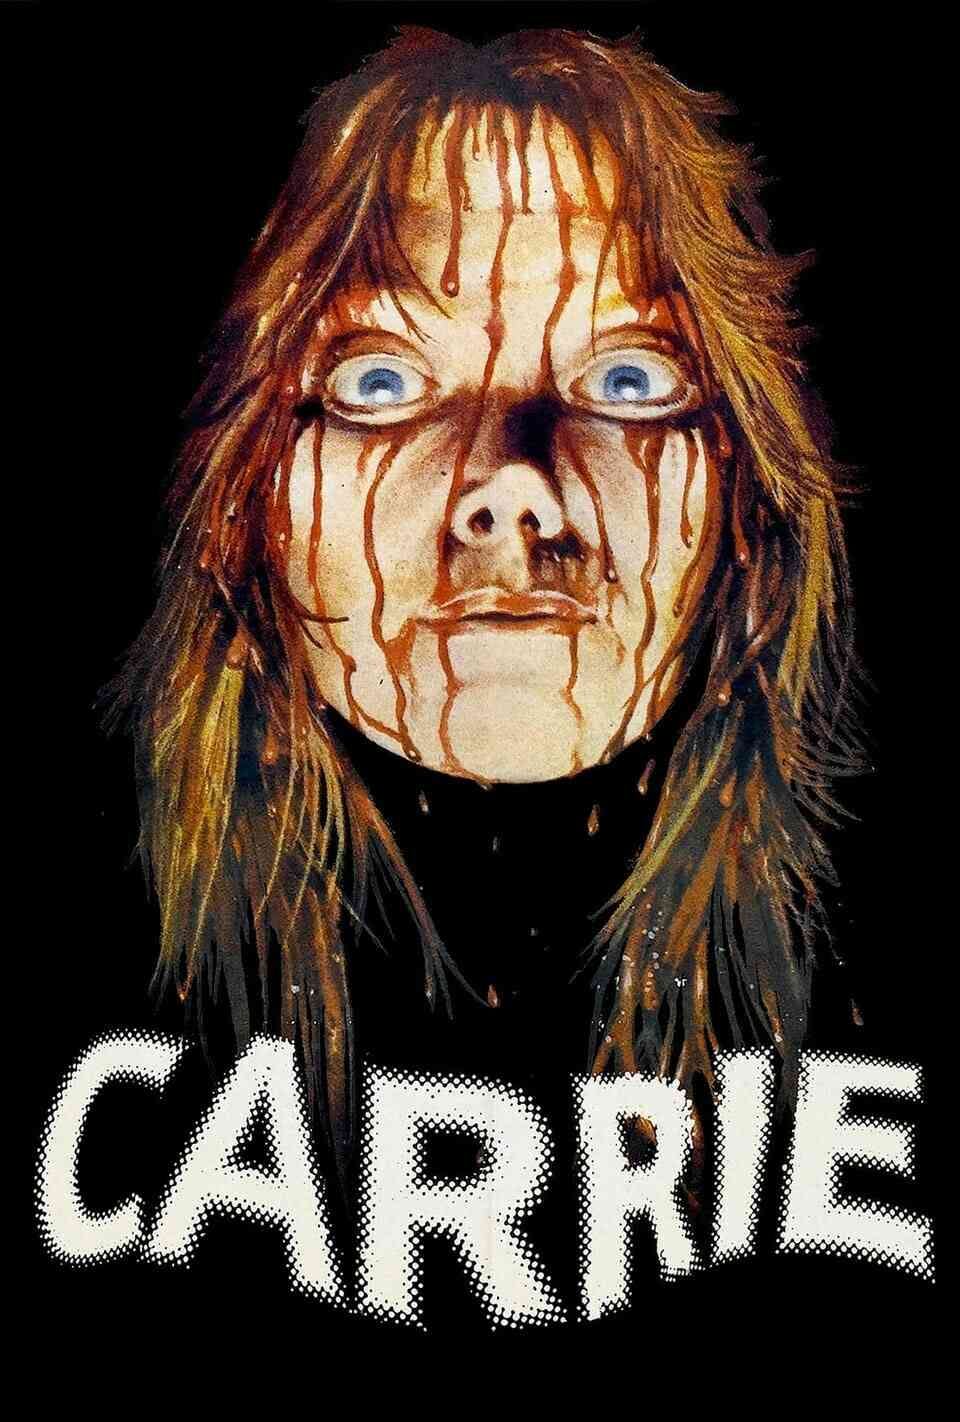 Read Carrie screenplay.